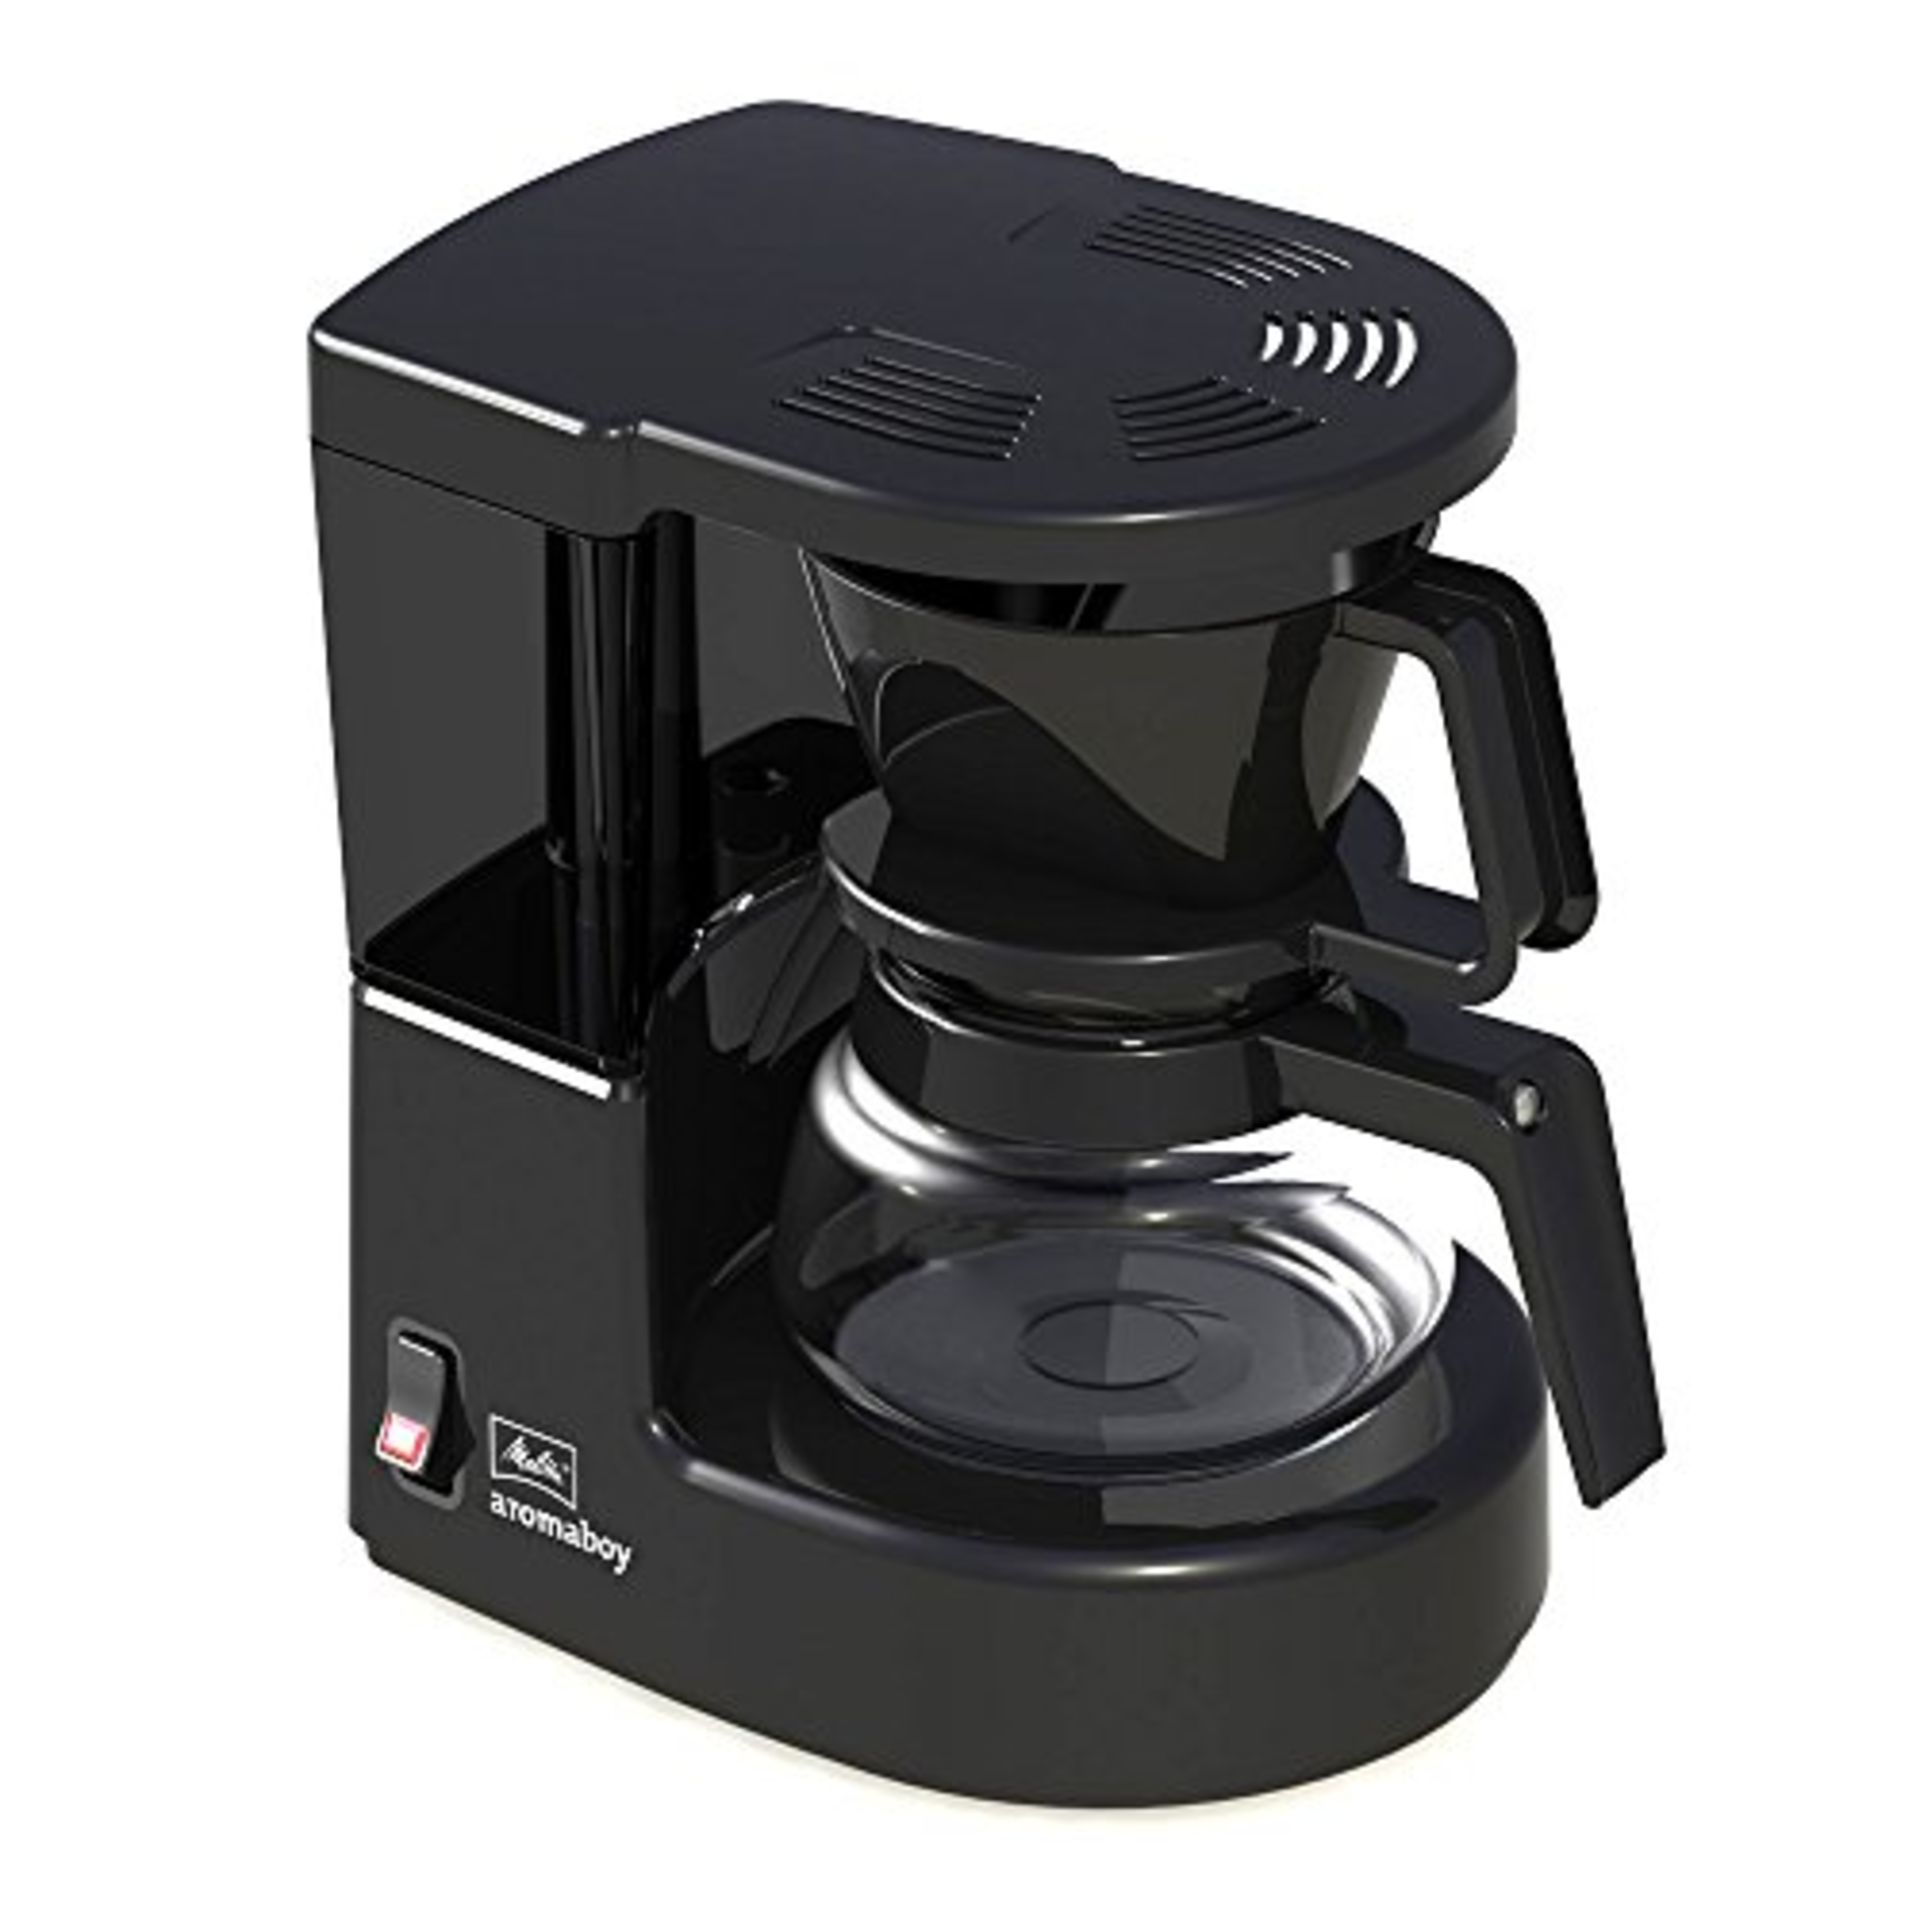 Melitta 6707286 Aroma Boy Filter Coffee Machine,0.34 liters, 500 W, Black